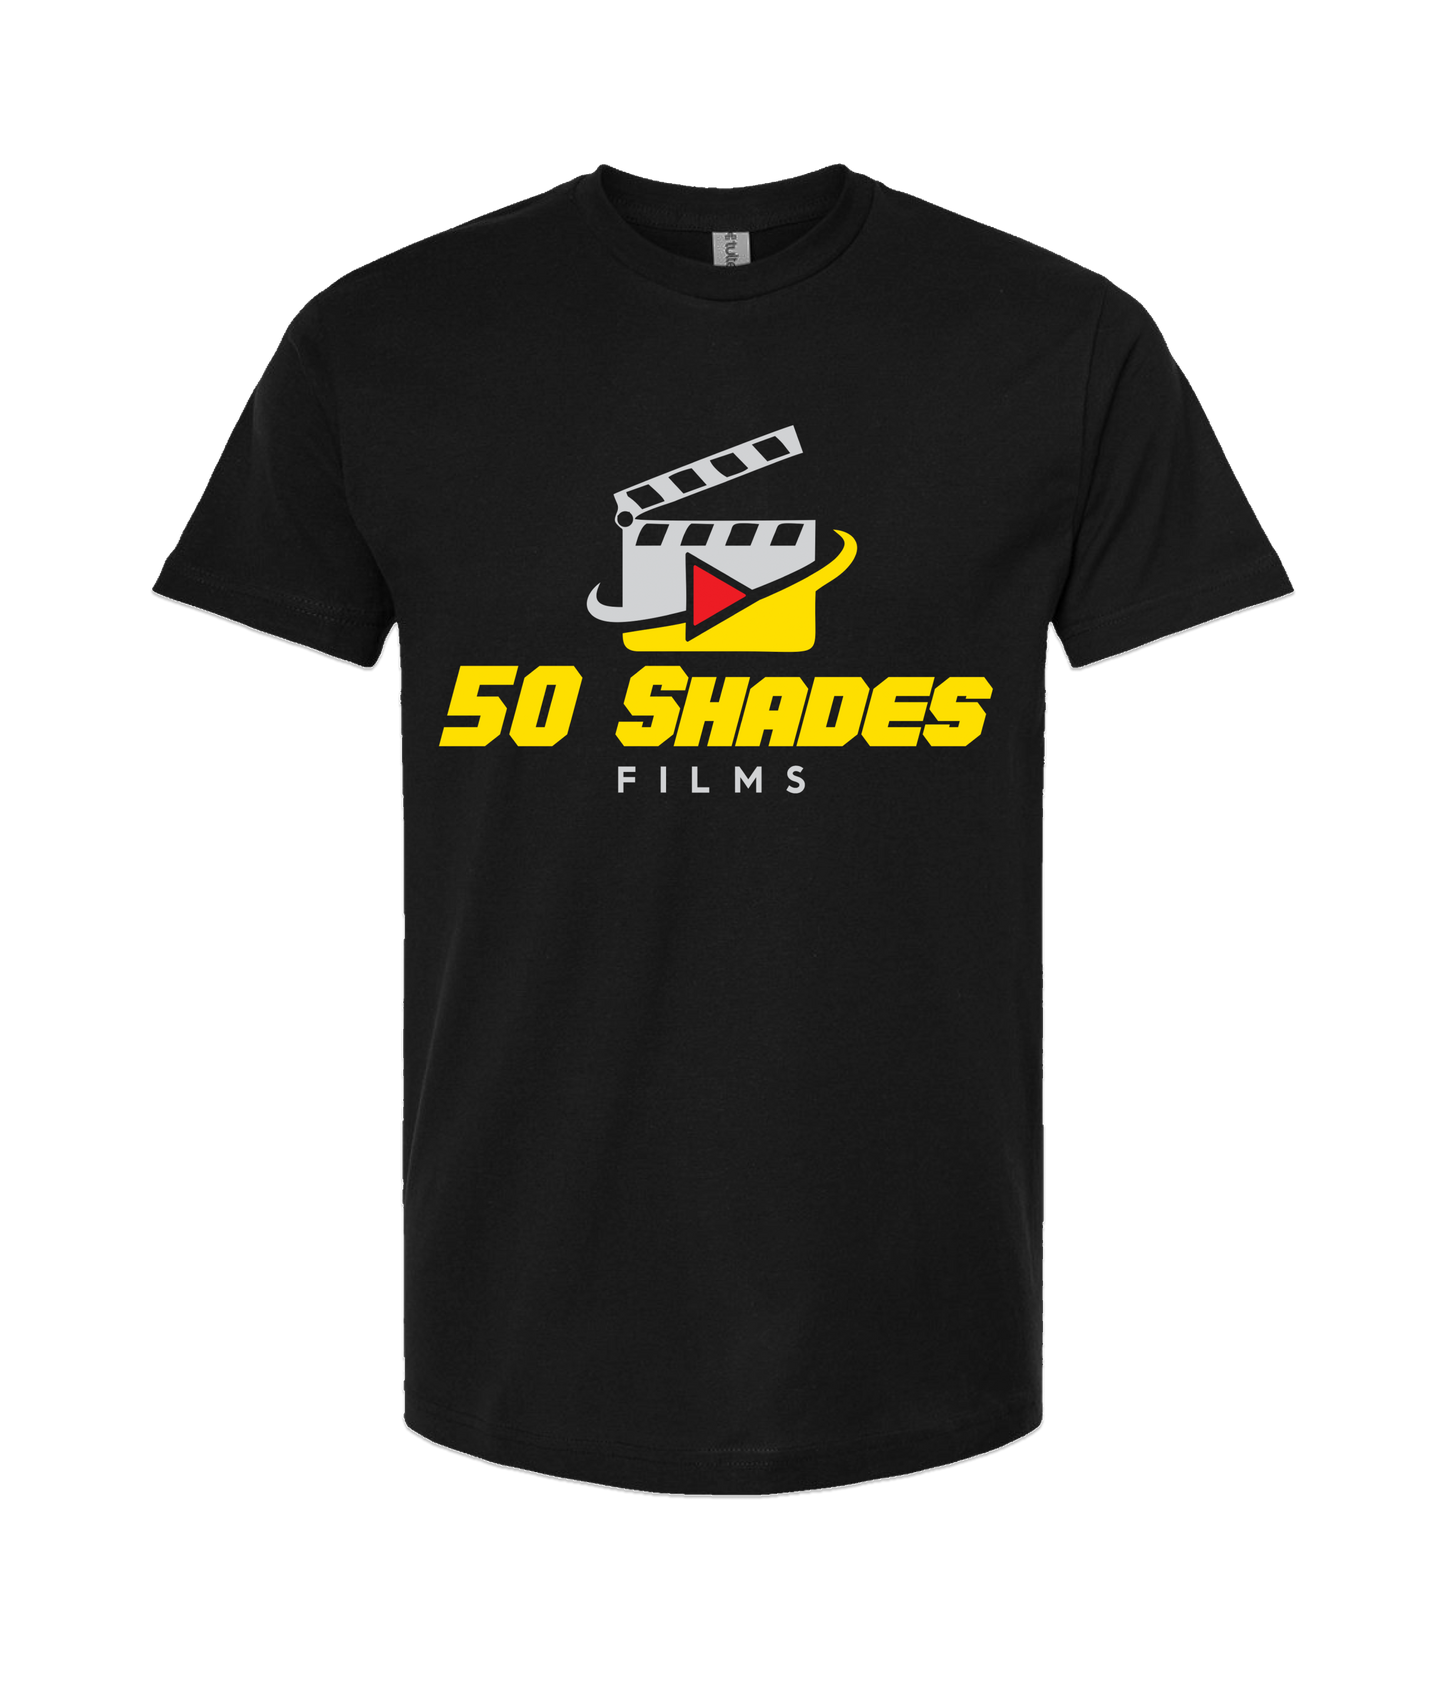 50 Shades Films - LOGO 1 - Black T-Shirt